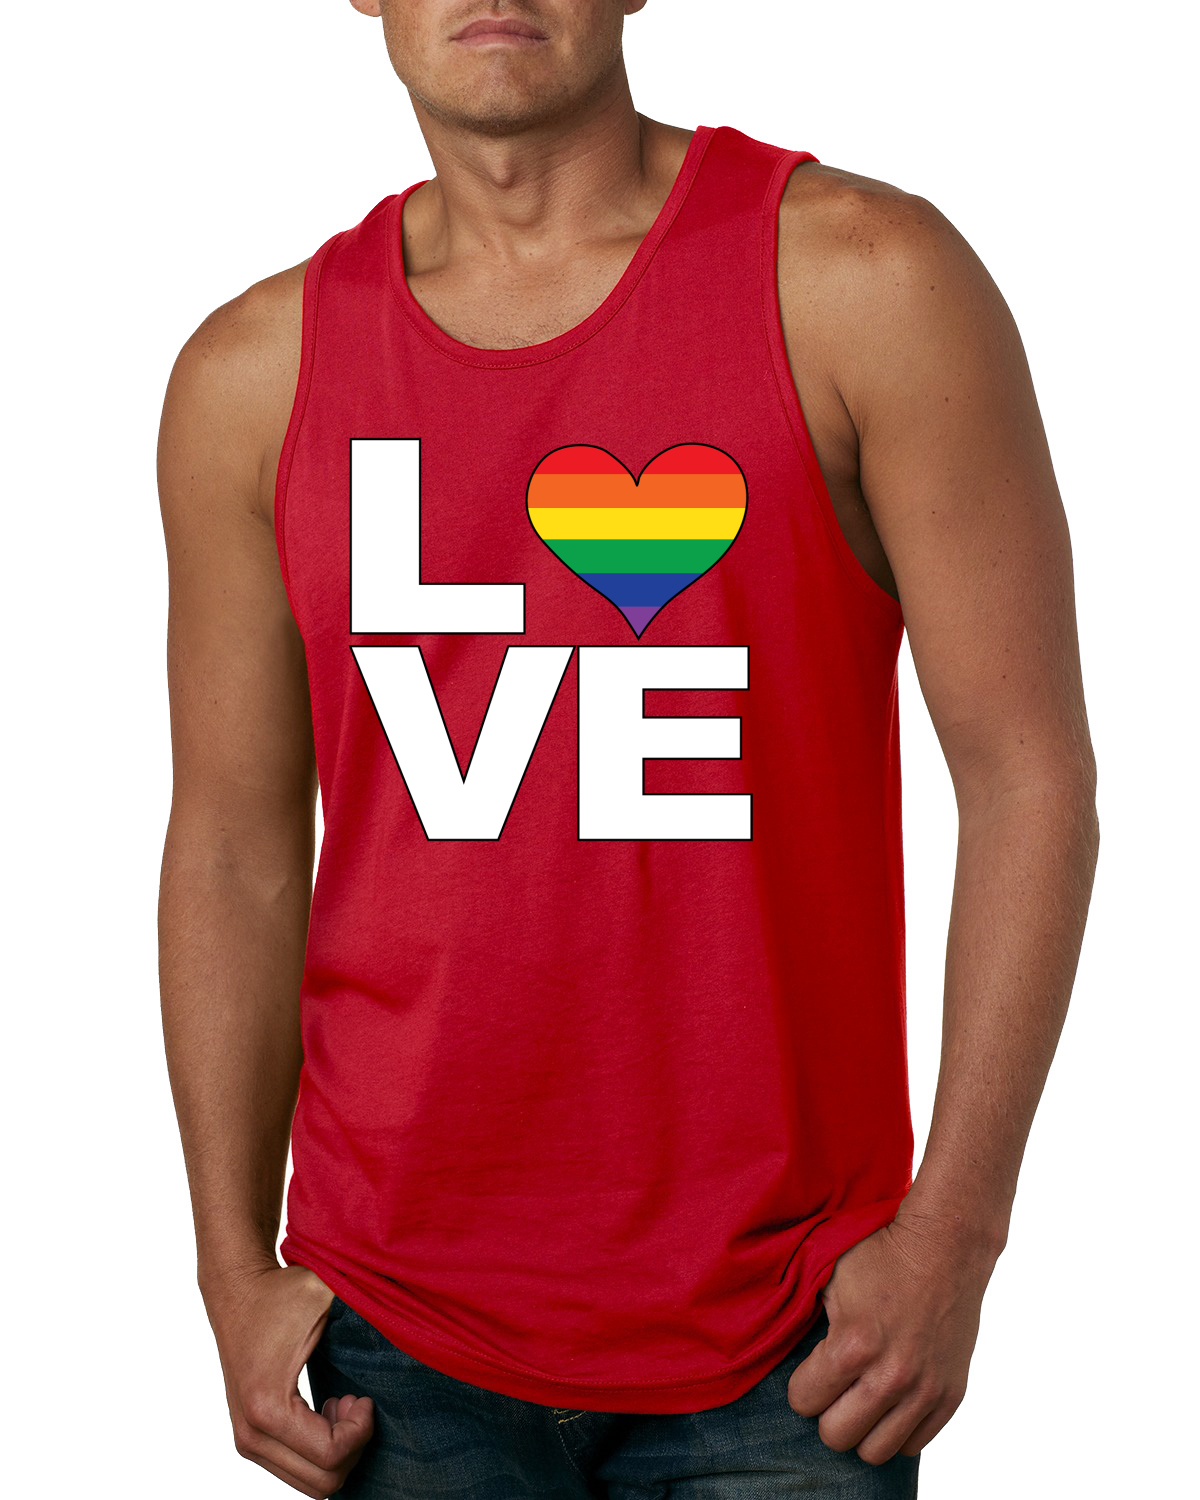 Relationship gay pride shirts - mserlion